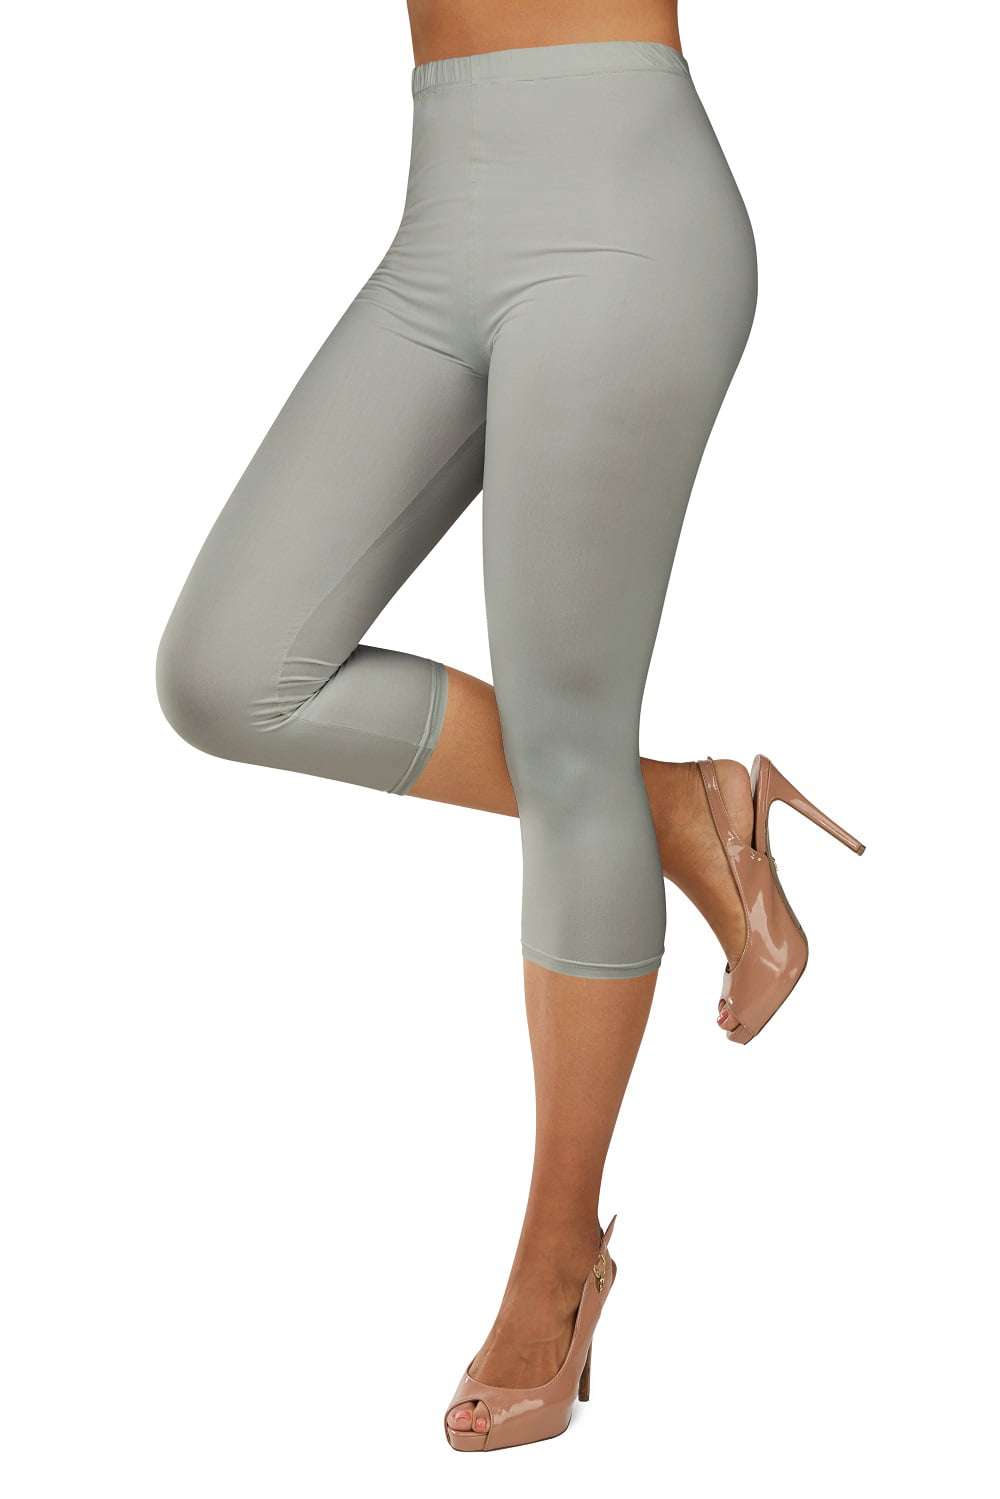 Gilbin Ultra Soft Capri High Waist Leggings for Women-Many Colors -One Size  & Plus Size (Navy 3X-5X) 